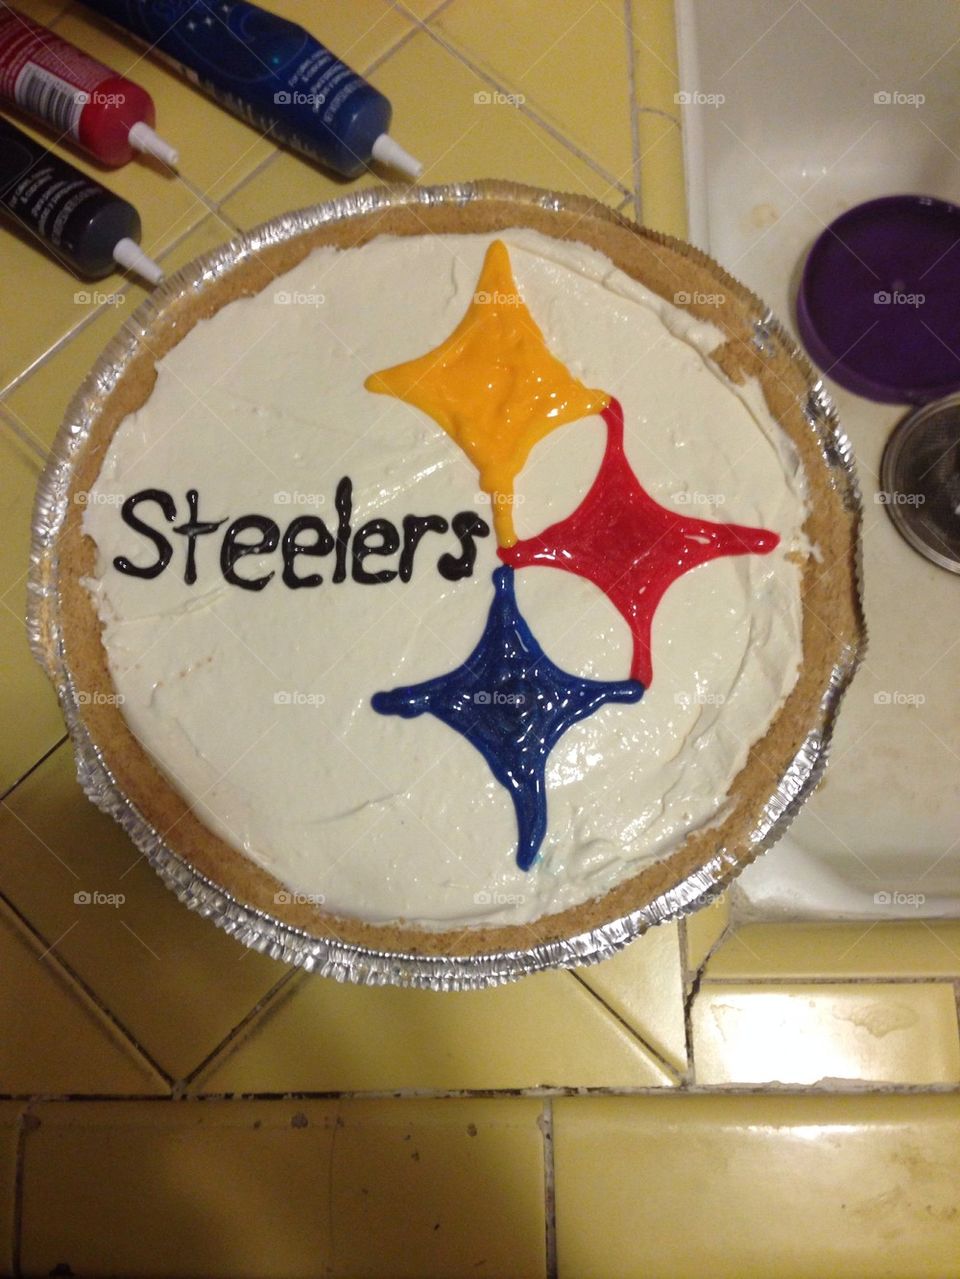 Steelers Cheesecake